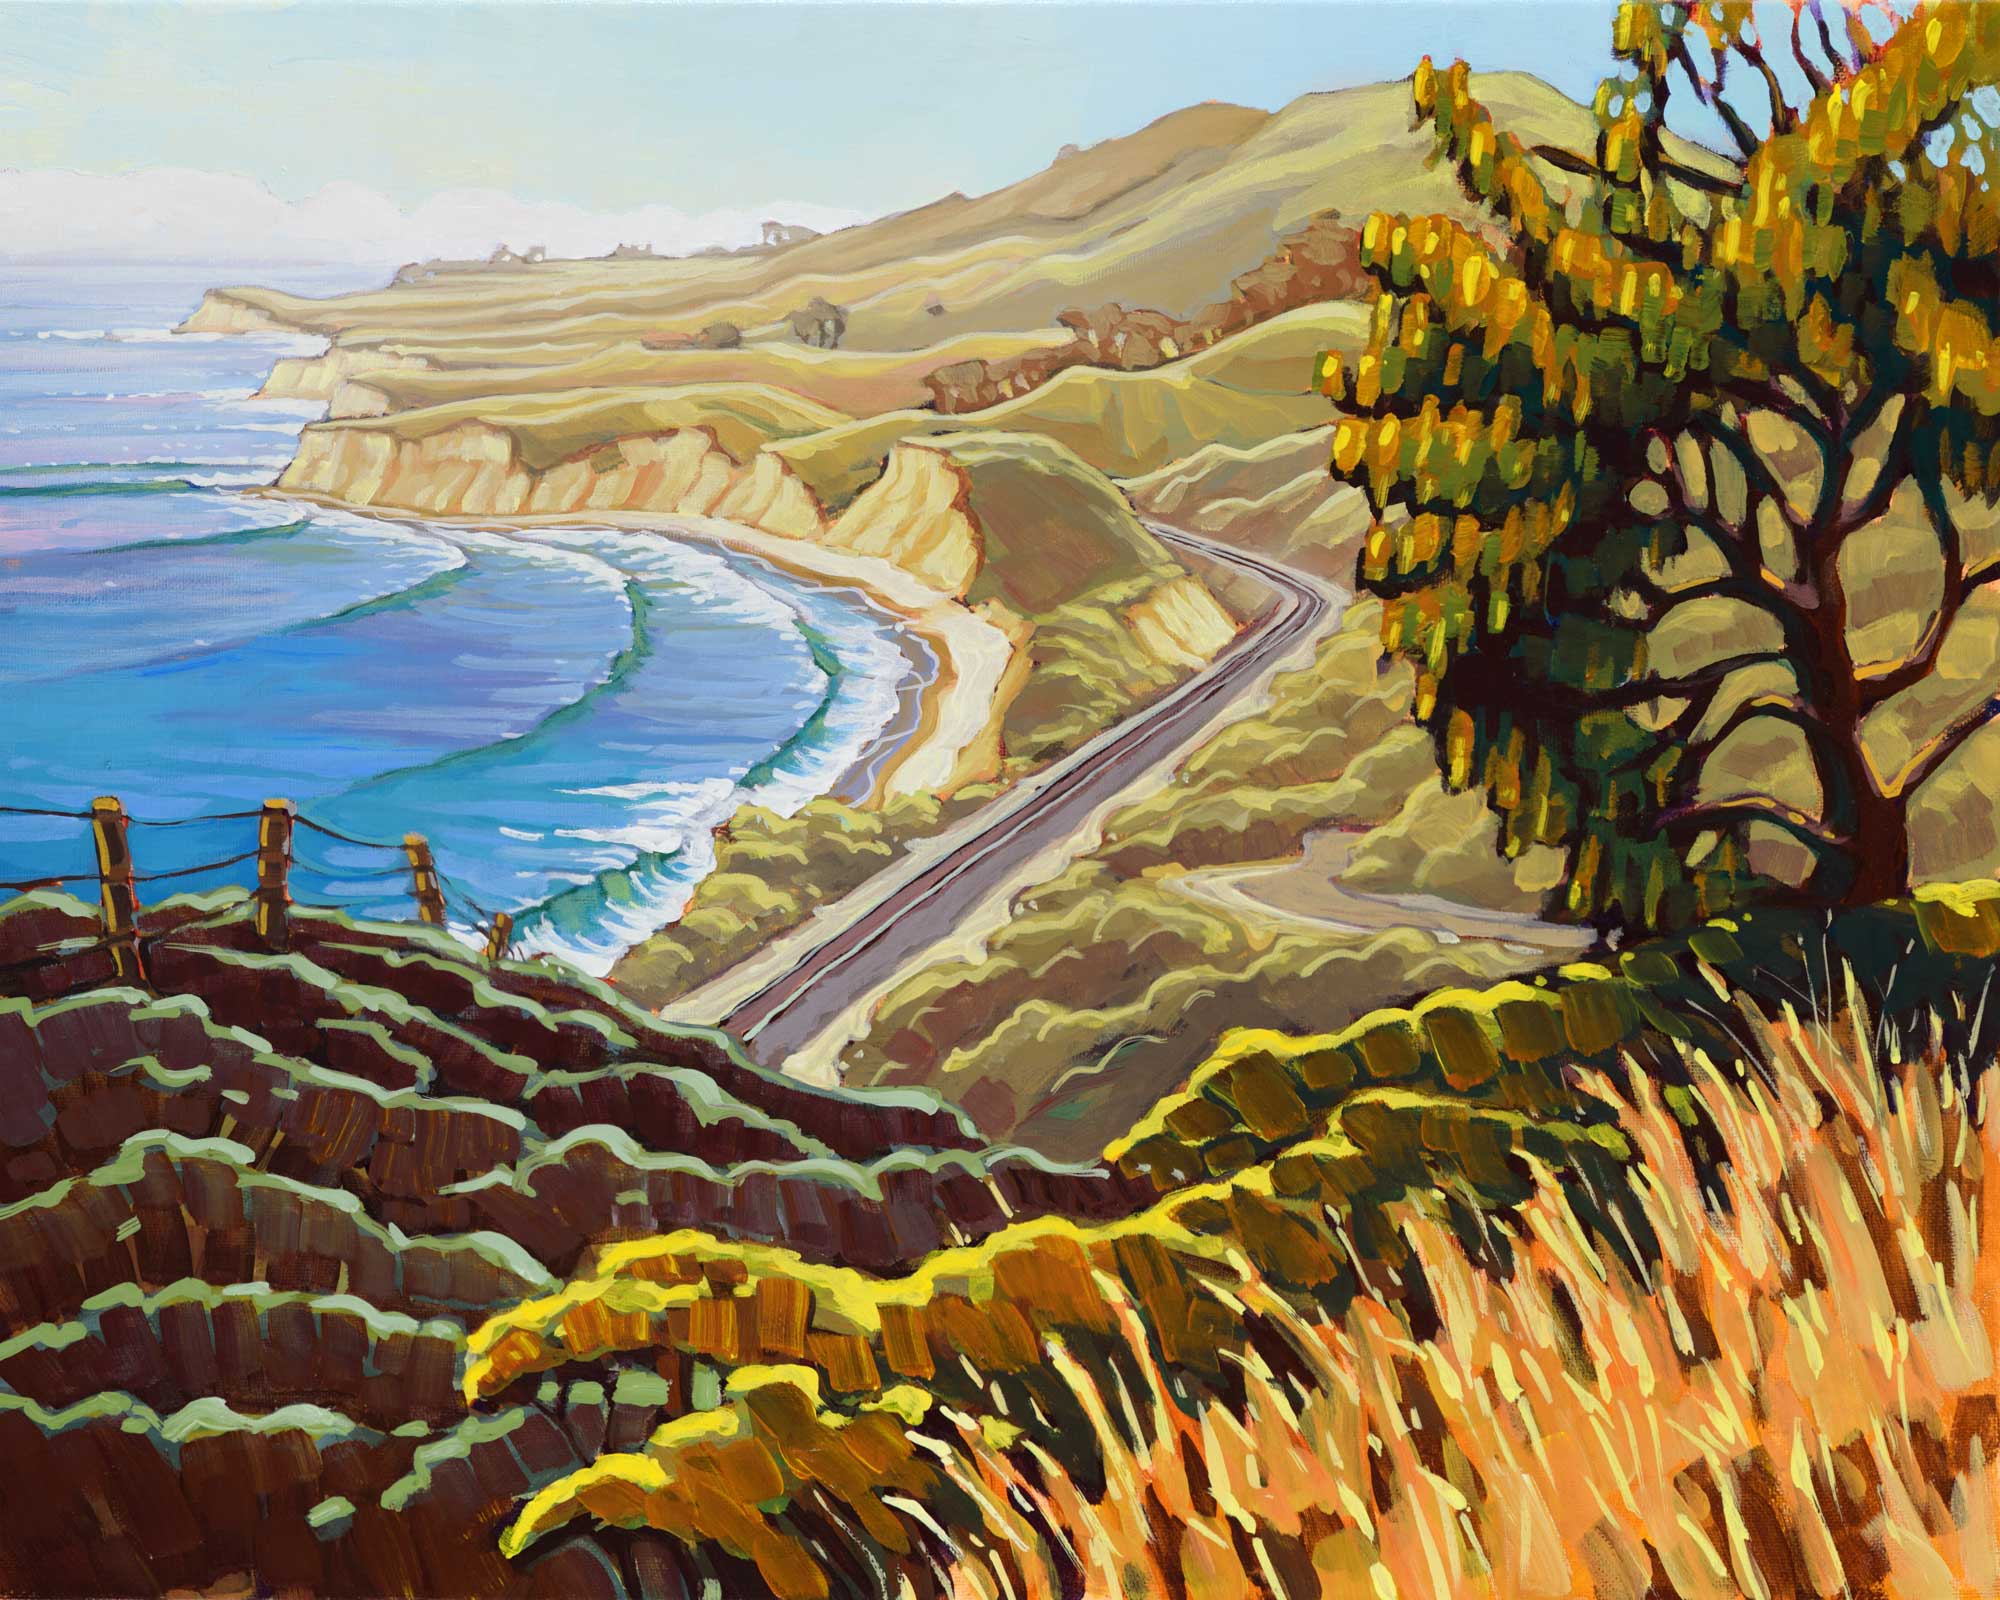 Plein air artwork from hollister ranch on the santa barabara coast of southern california